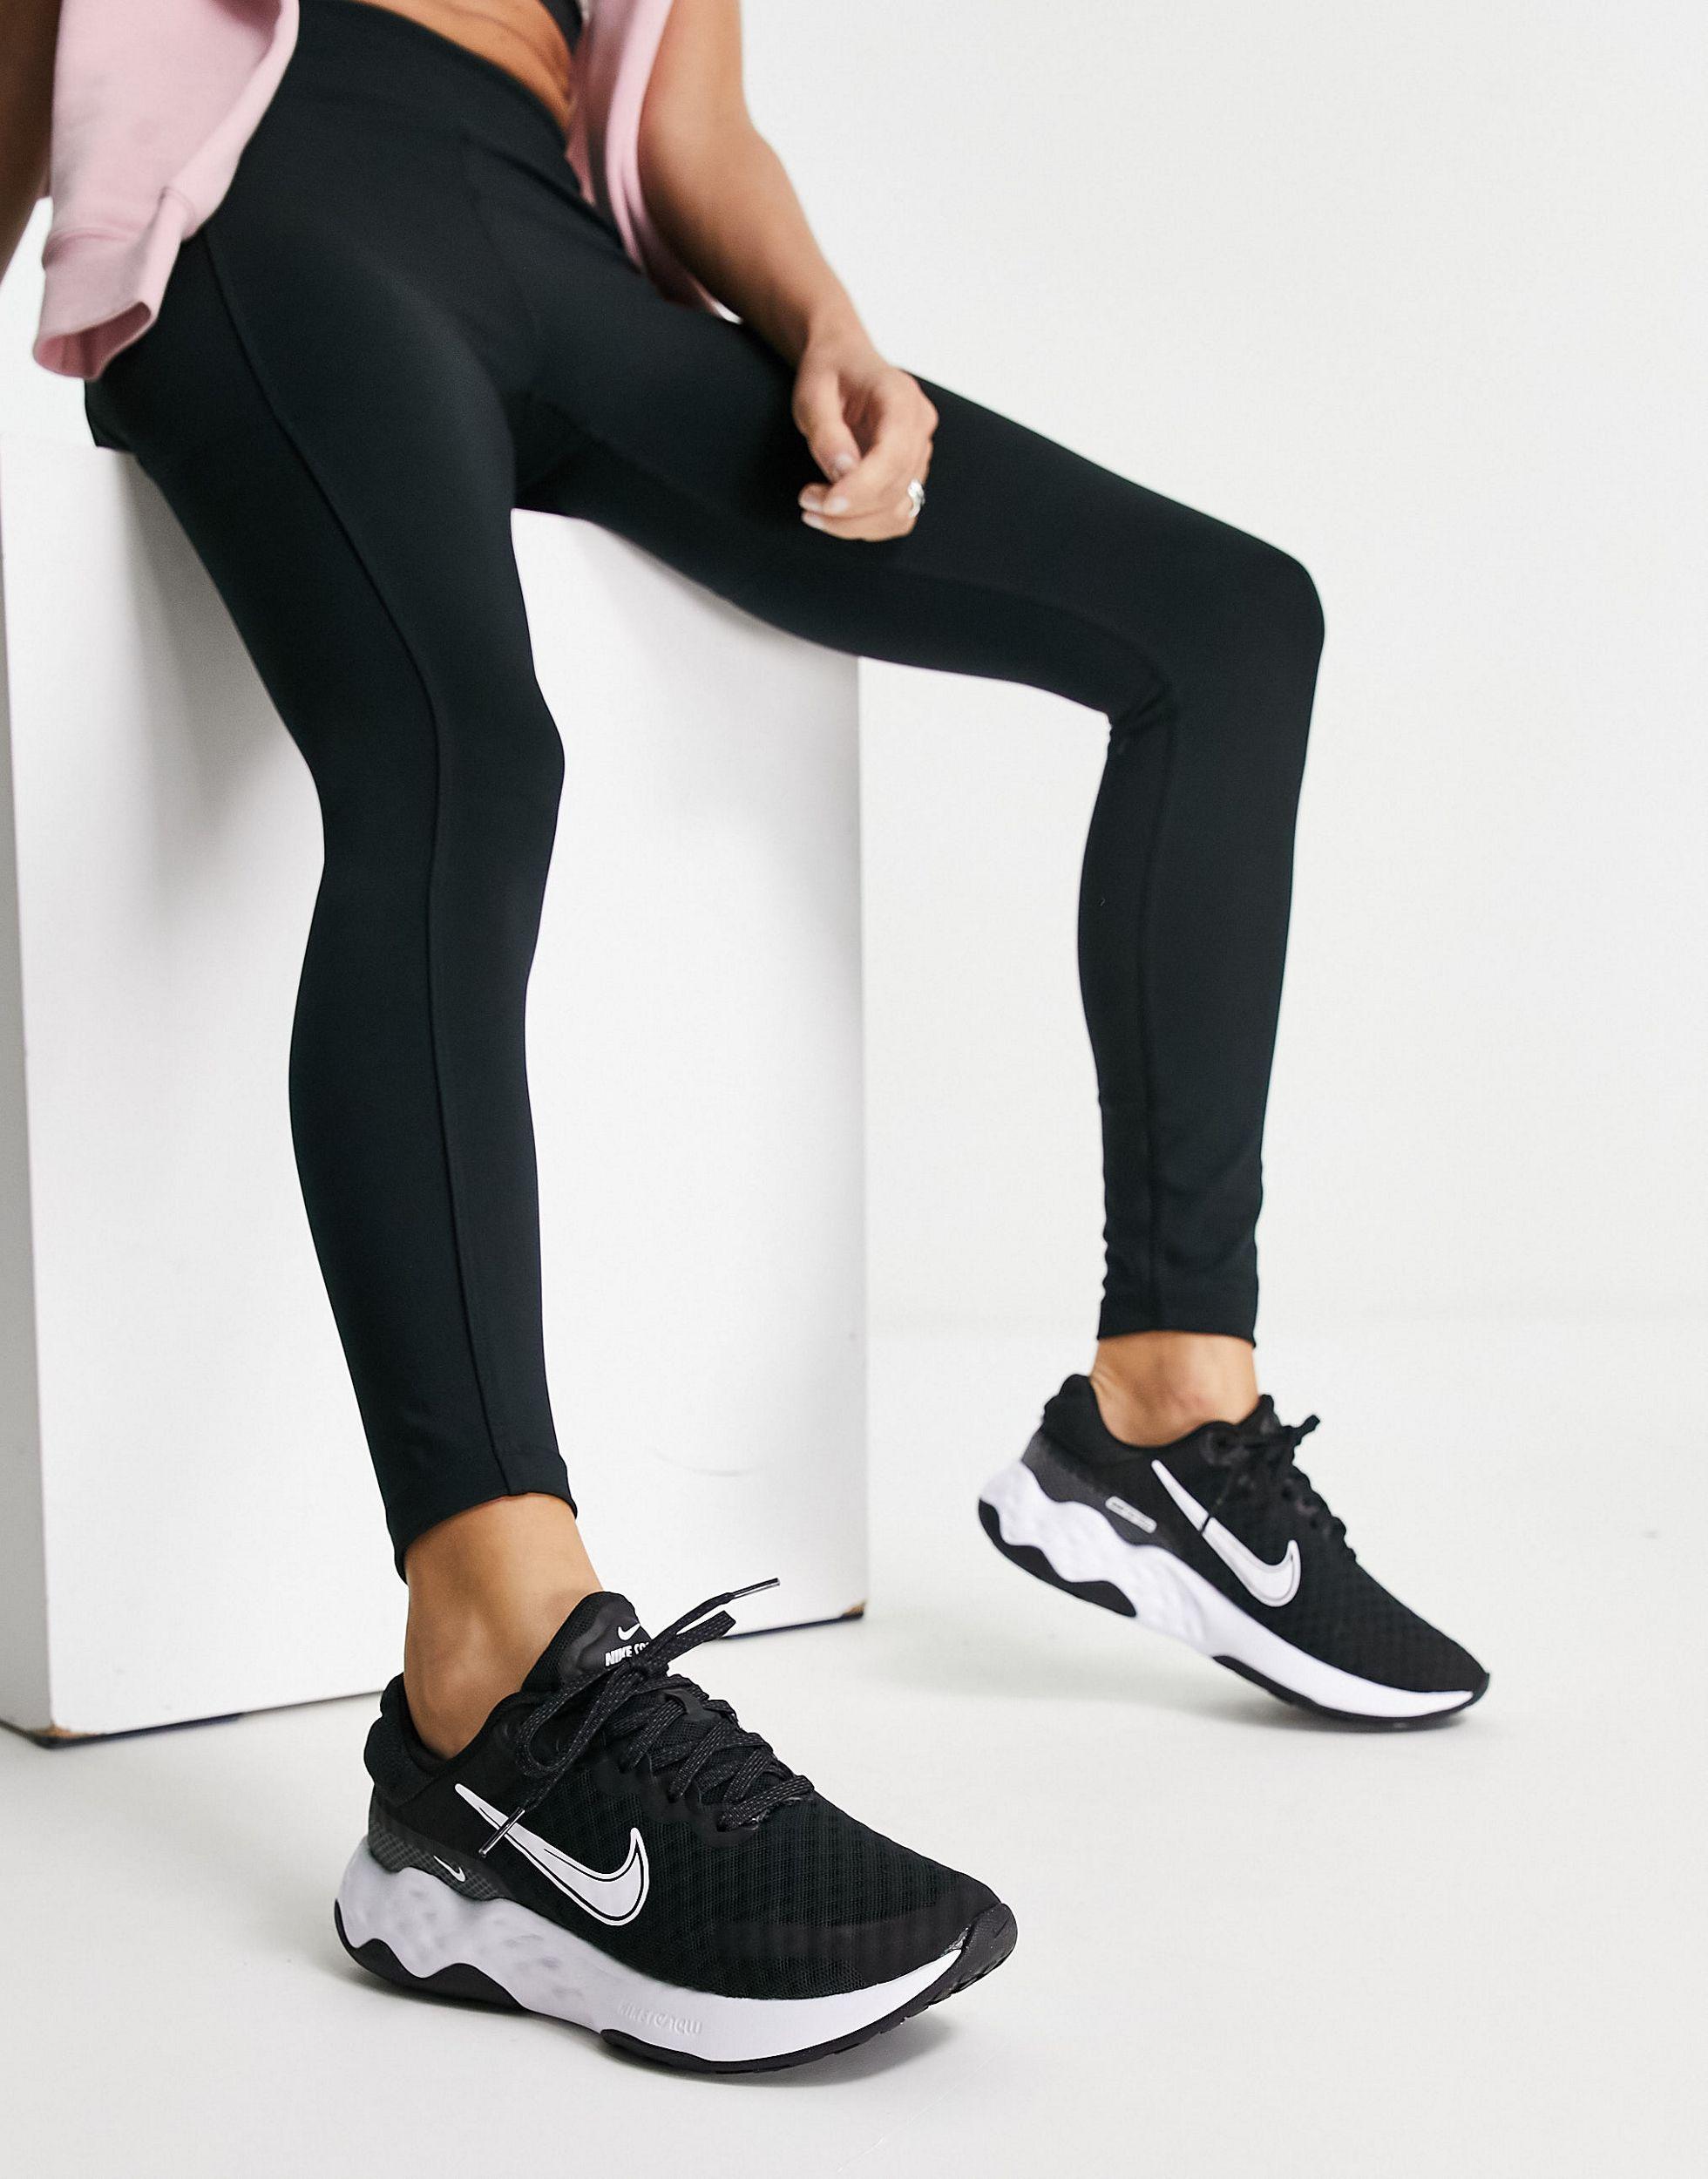 Nike Renew Ride 3 Trainers in Black | Lyst